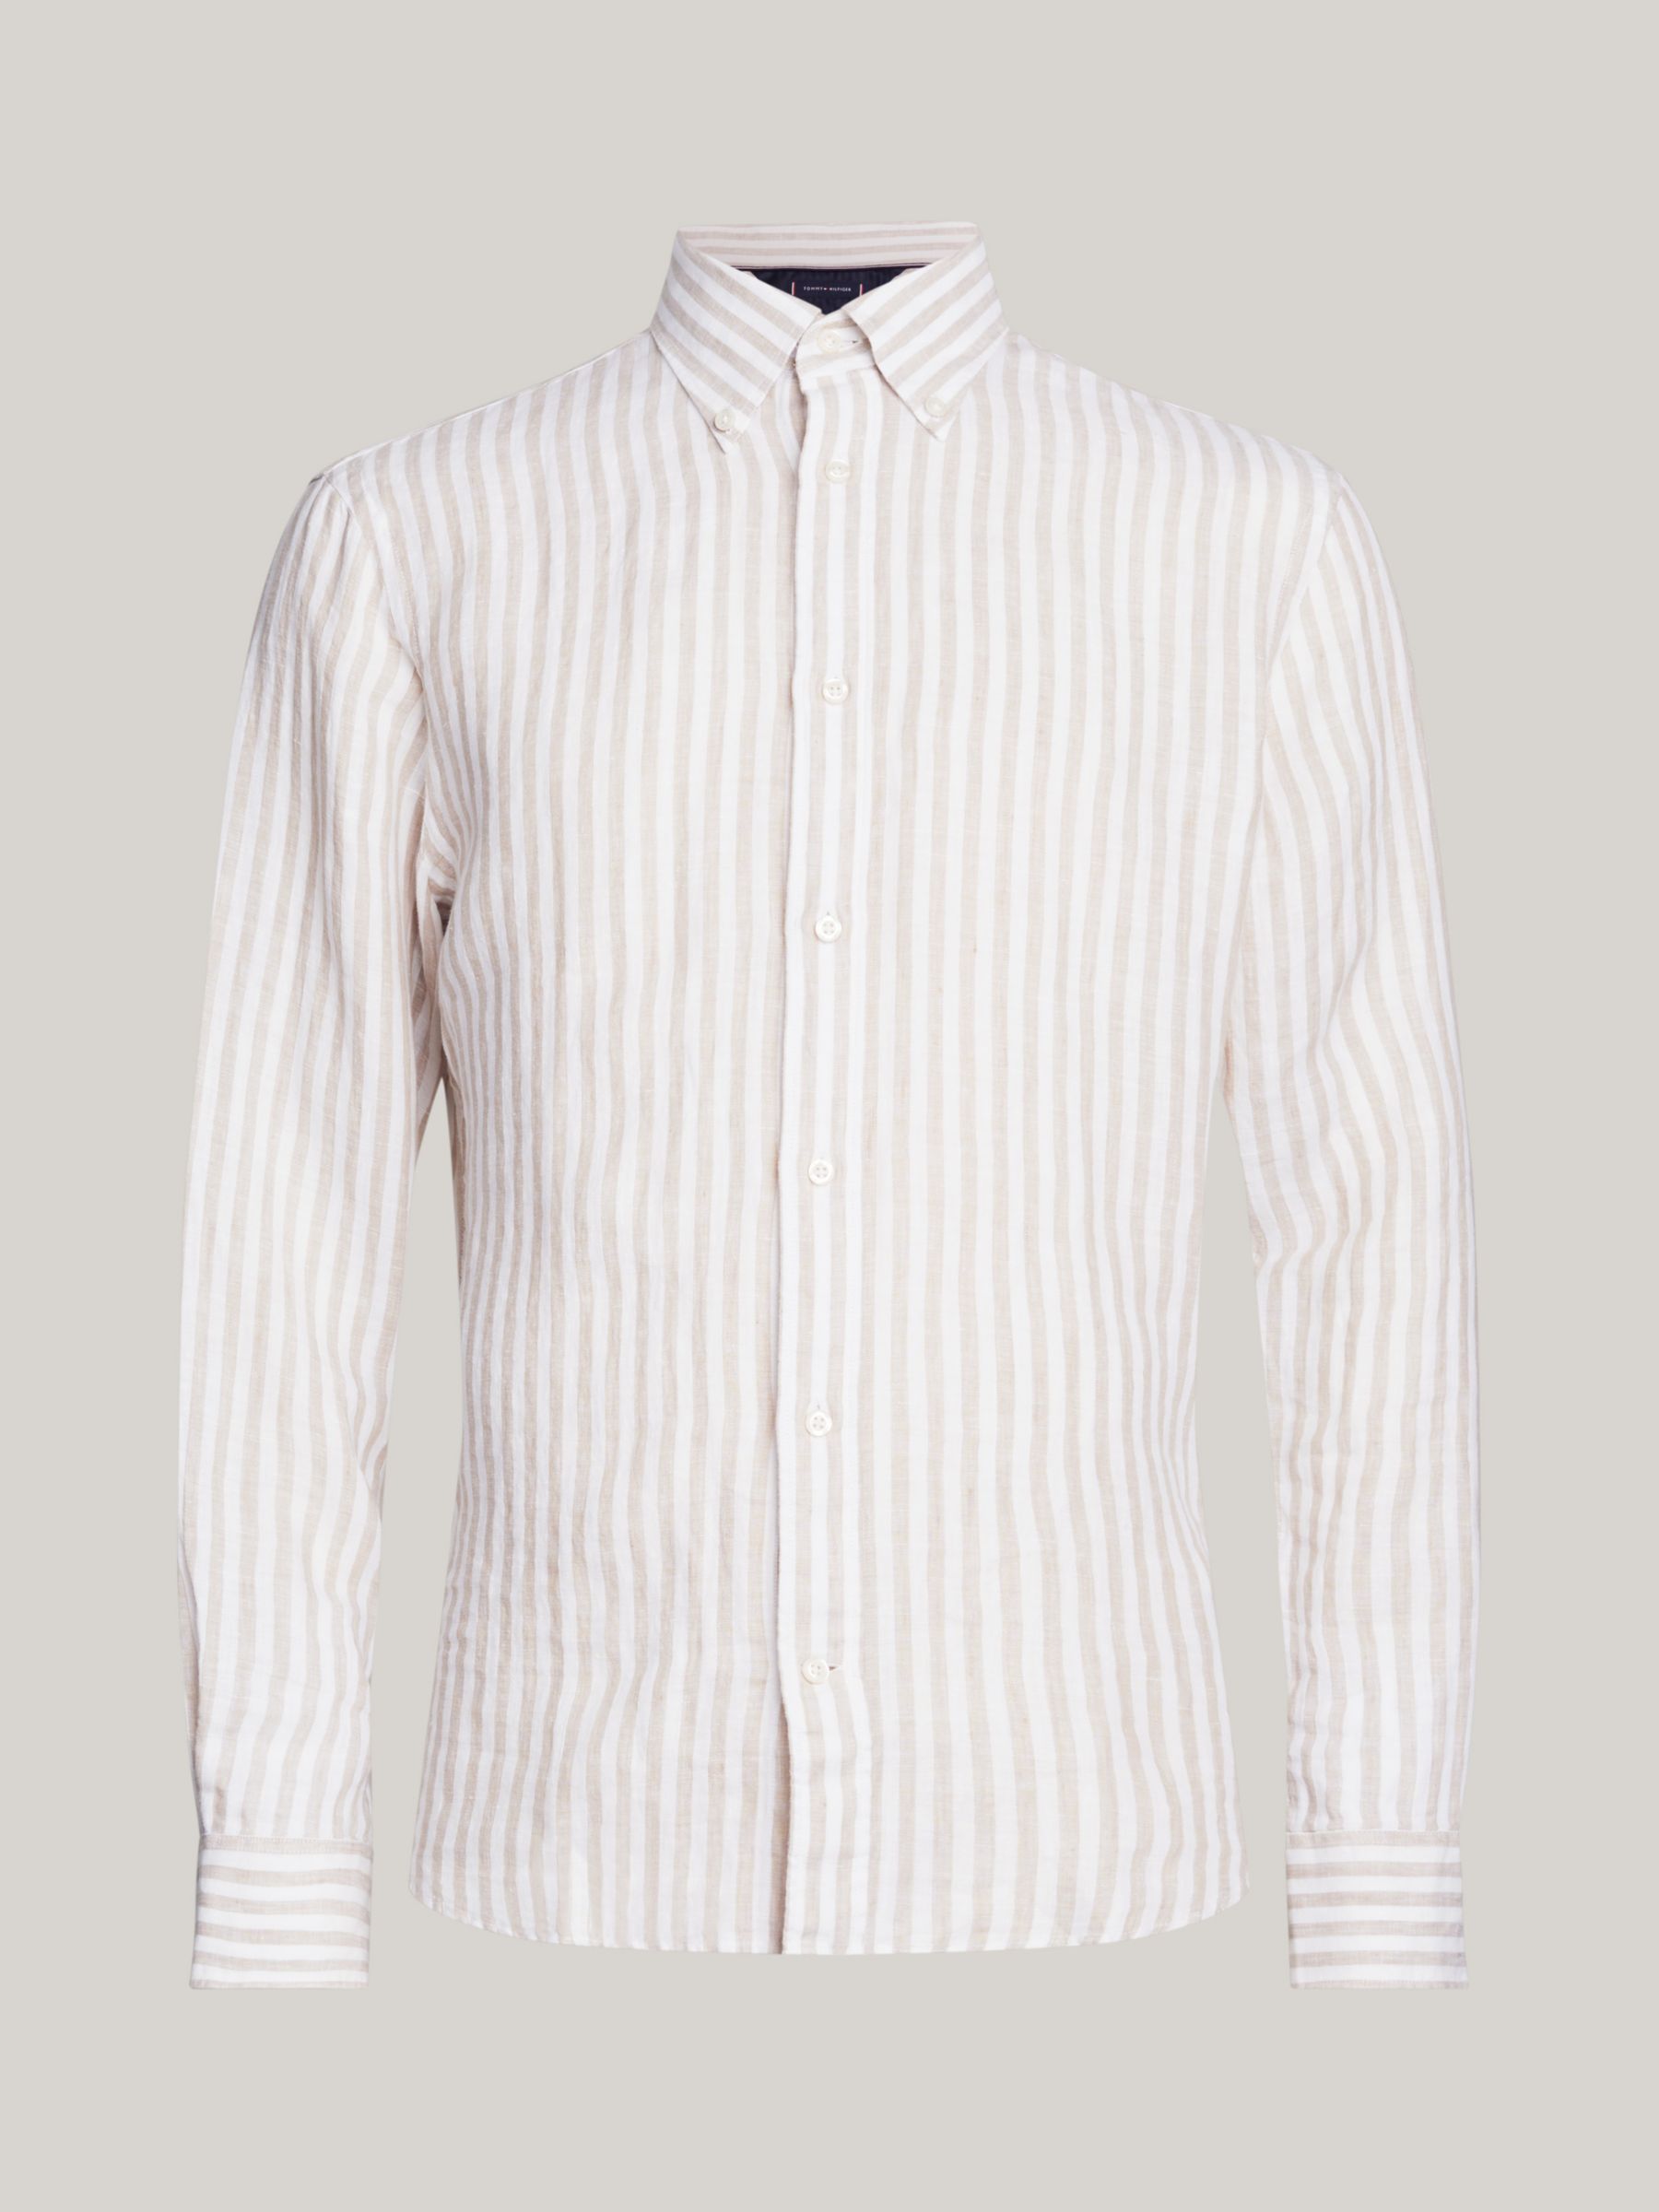 Tommy Hilfiger Linen Stripe Shirt, Beige/Optic White, S